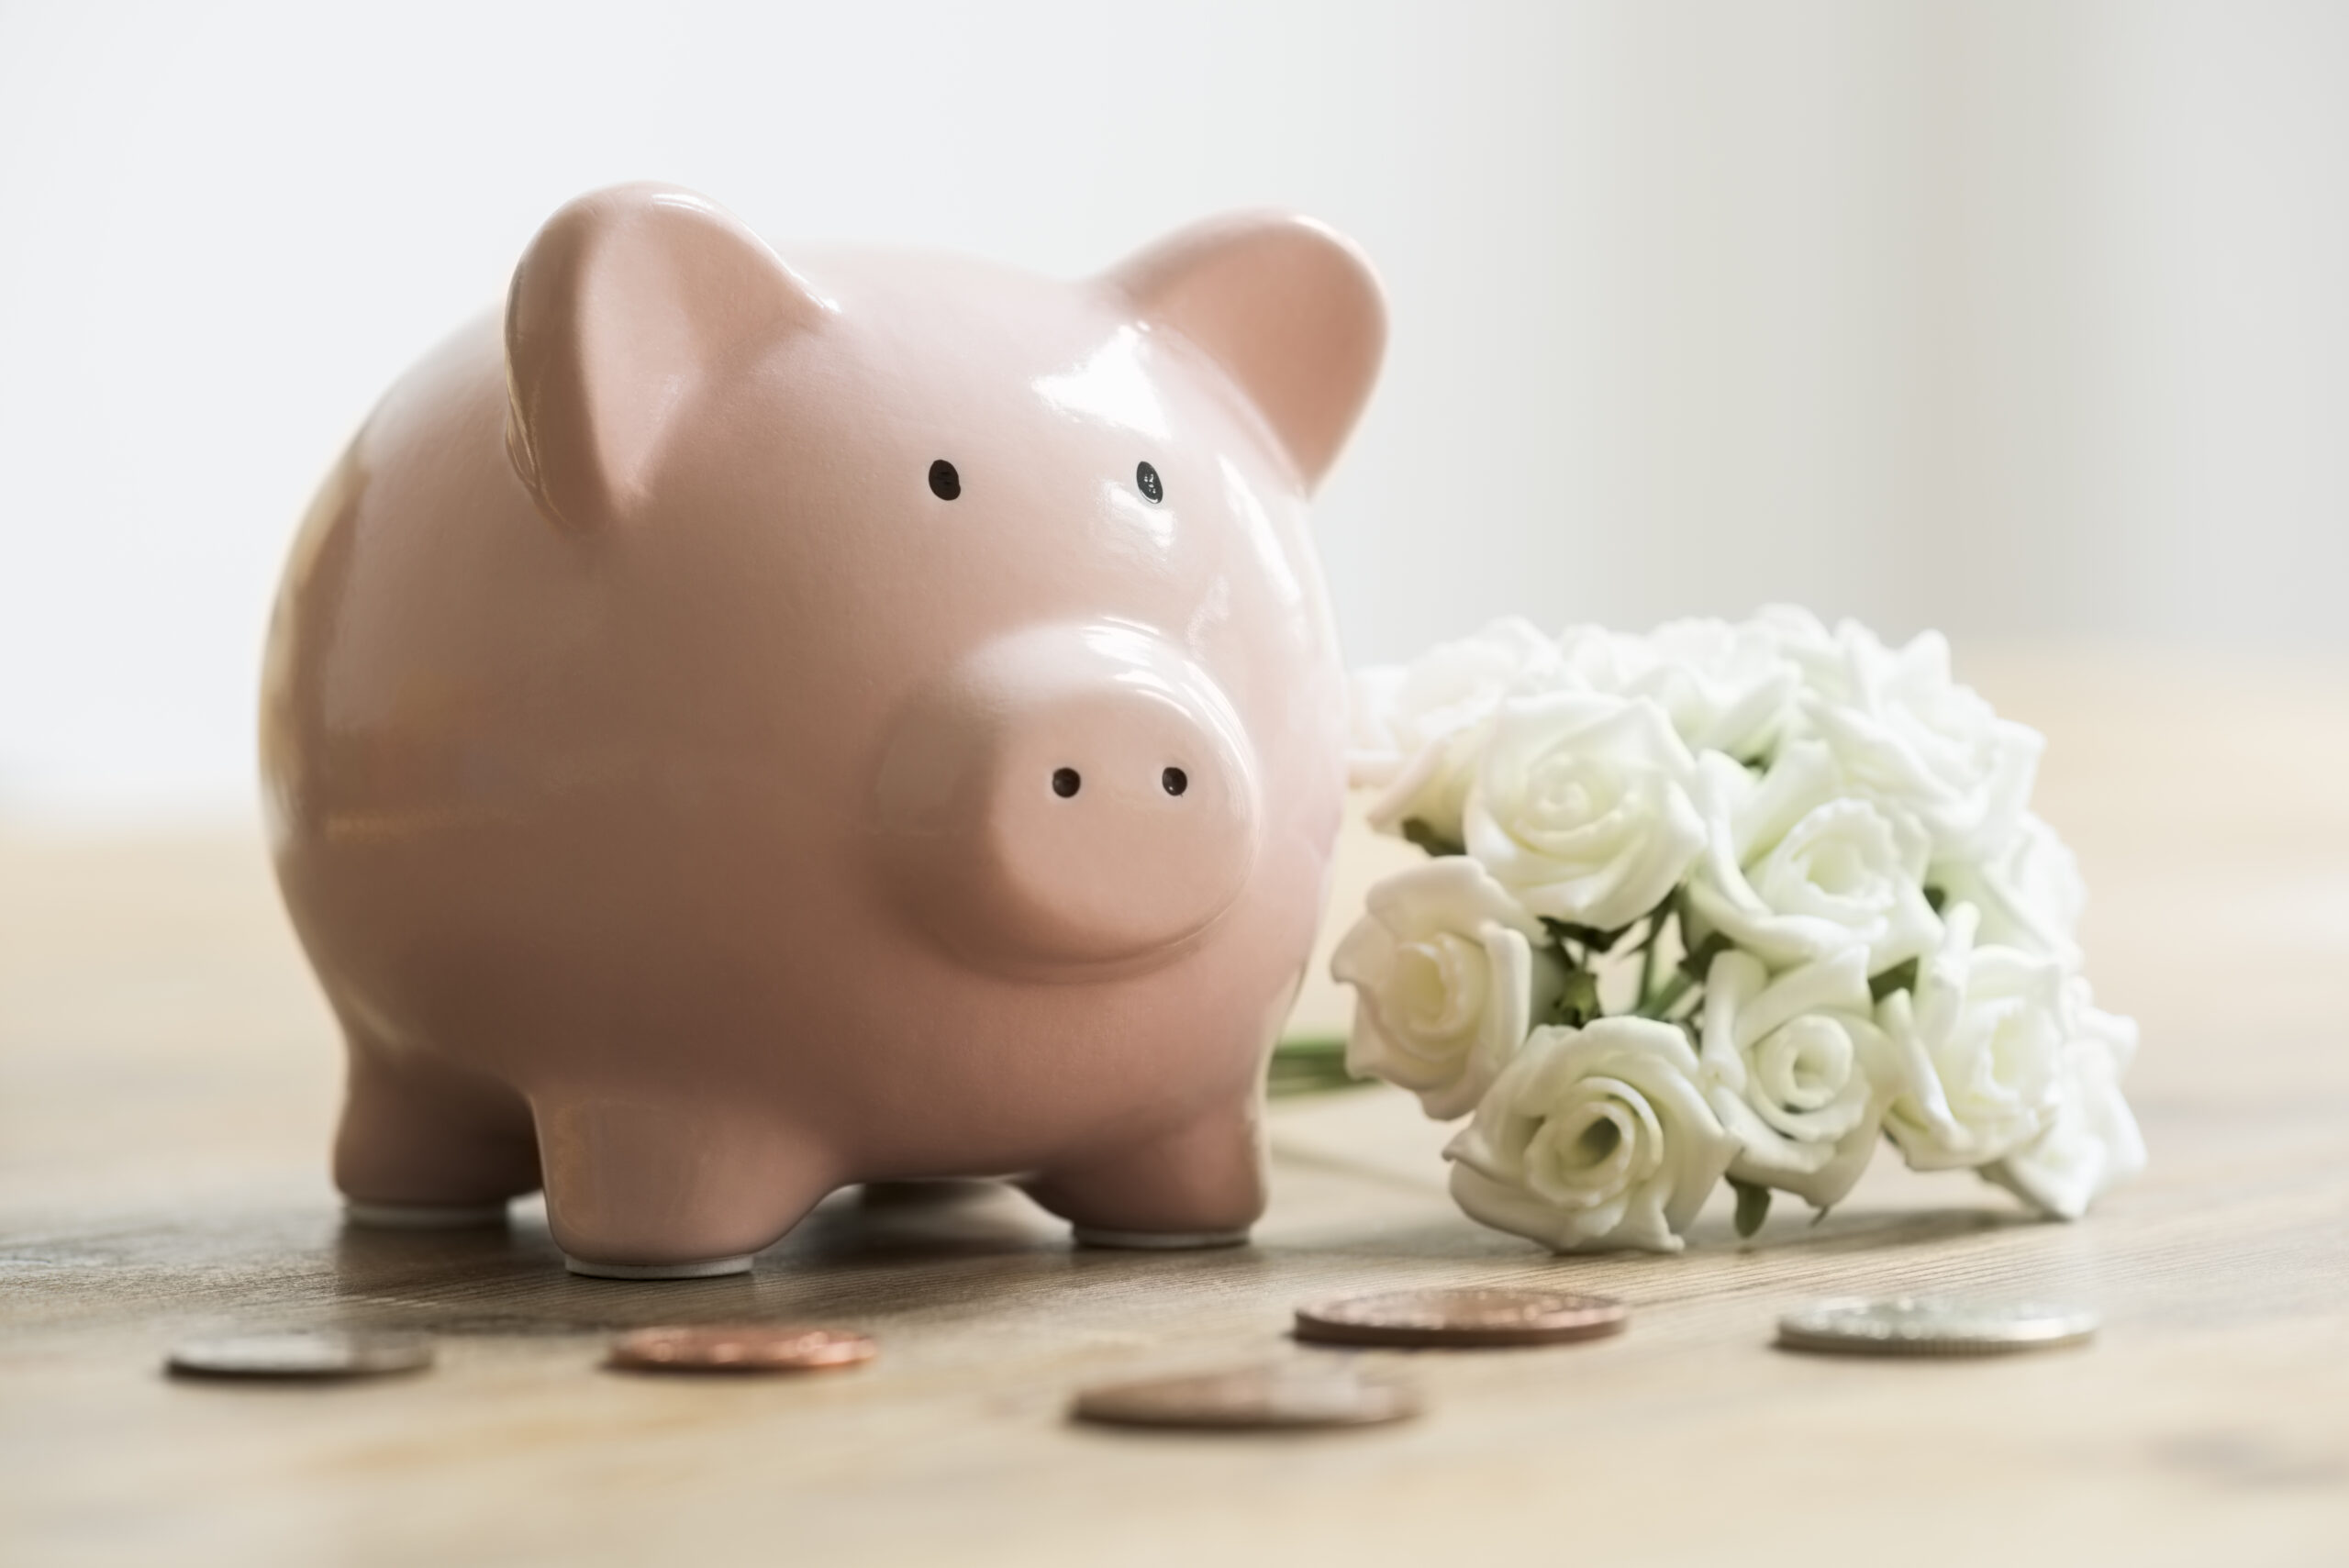 Wedding bouquet beside piggy bank and coins for saving